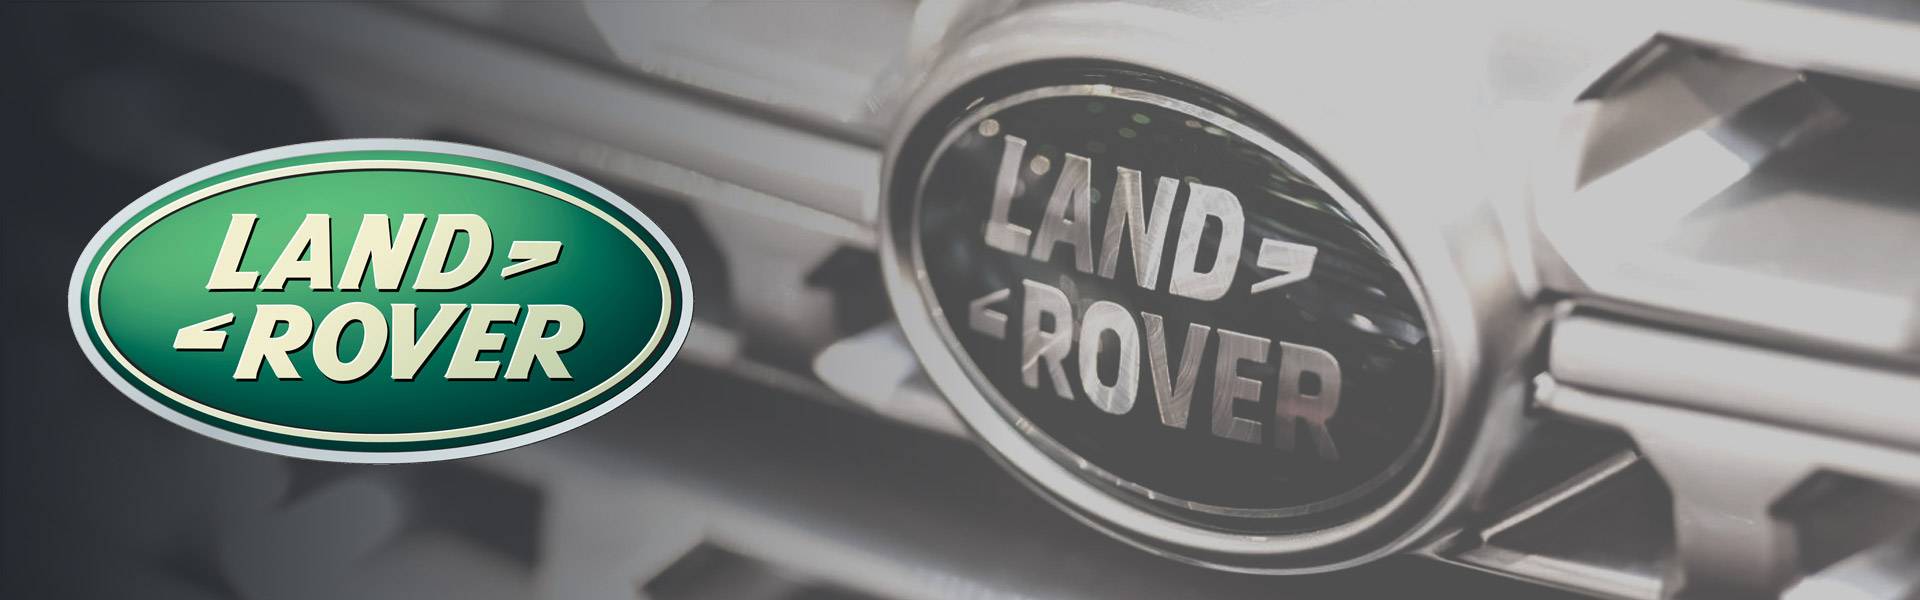 Land Rover Car Servicing Rotherham